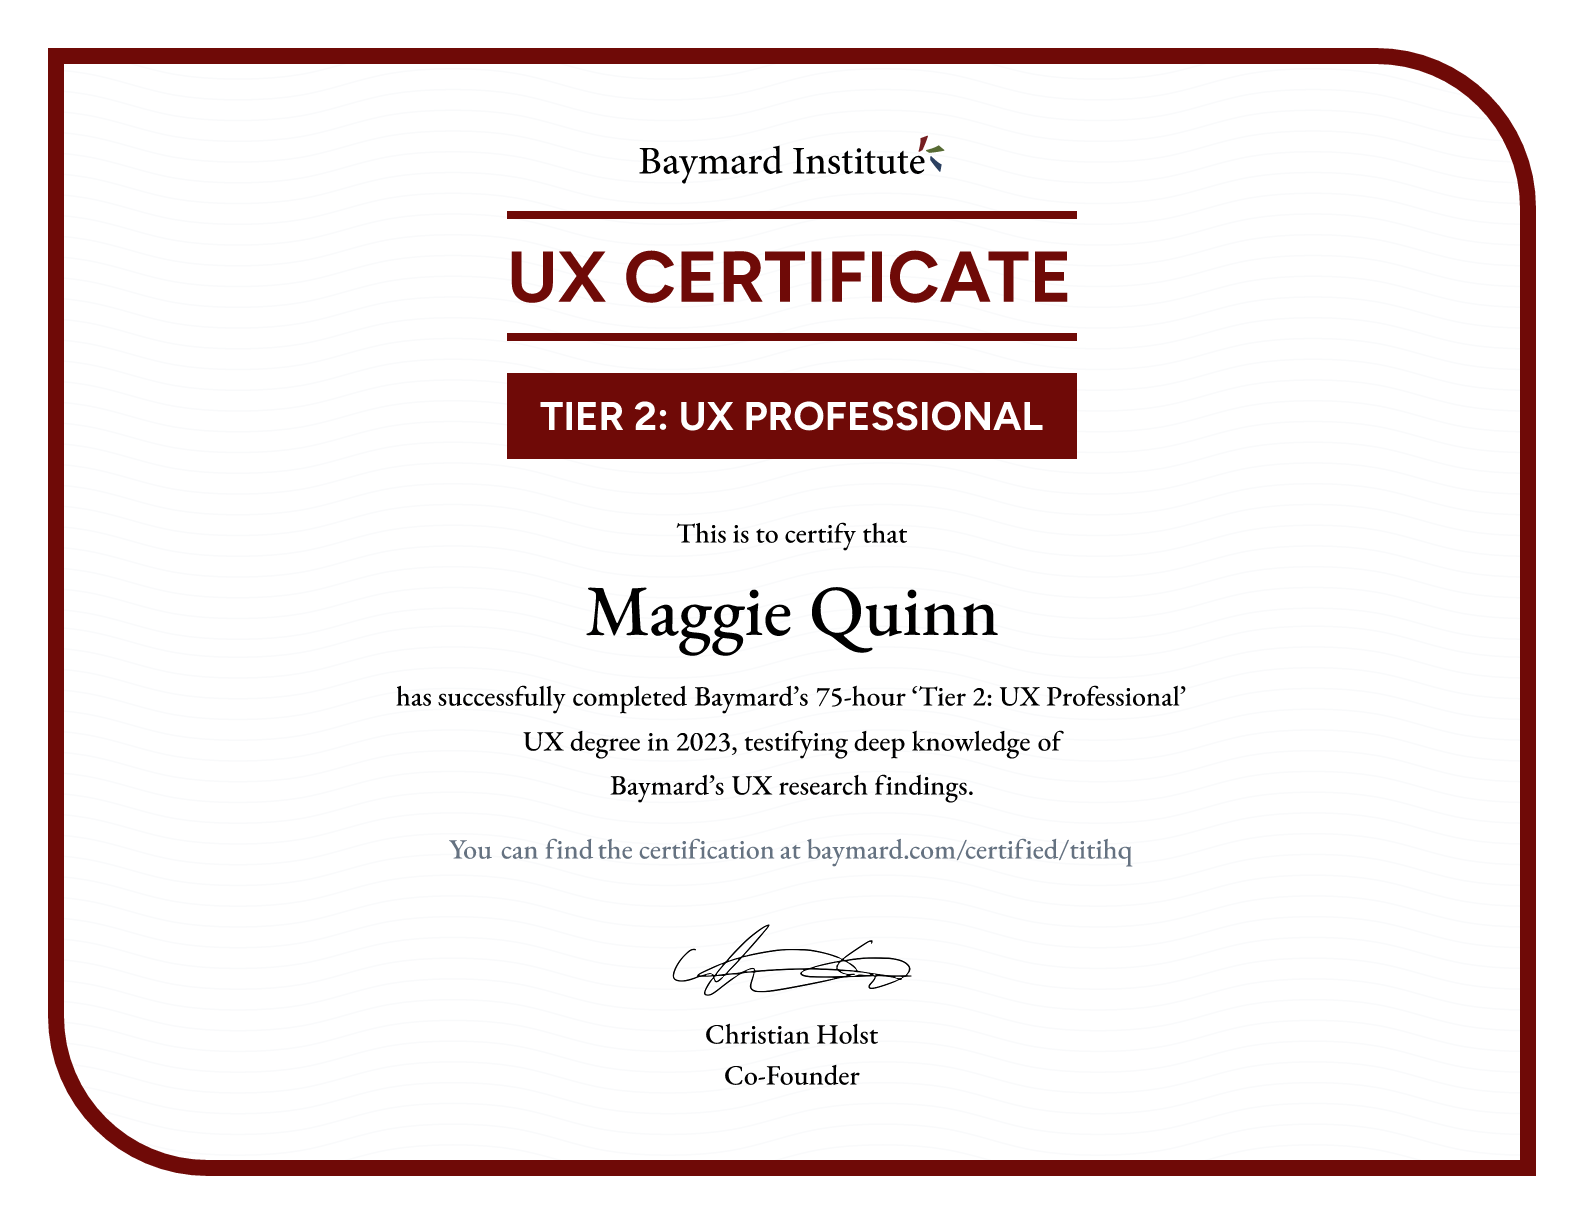 Maggie Quinn’s certificate